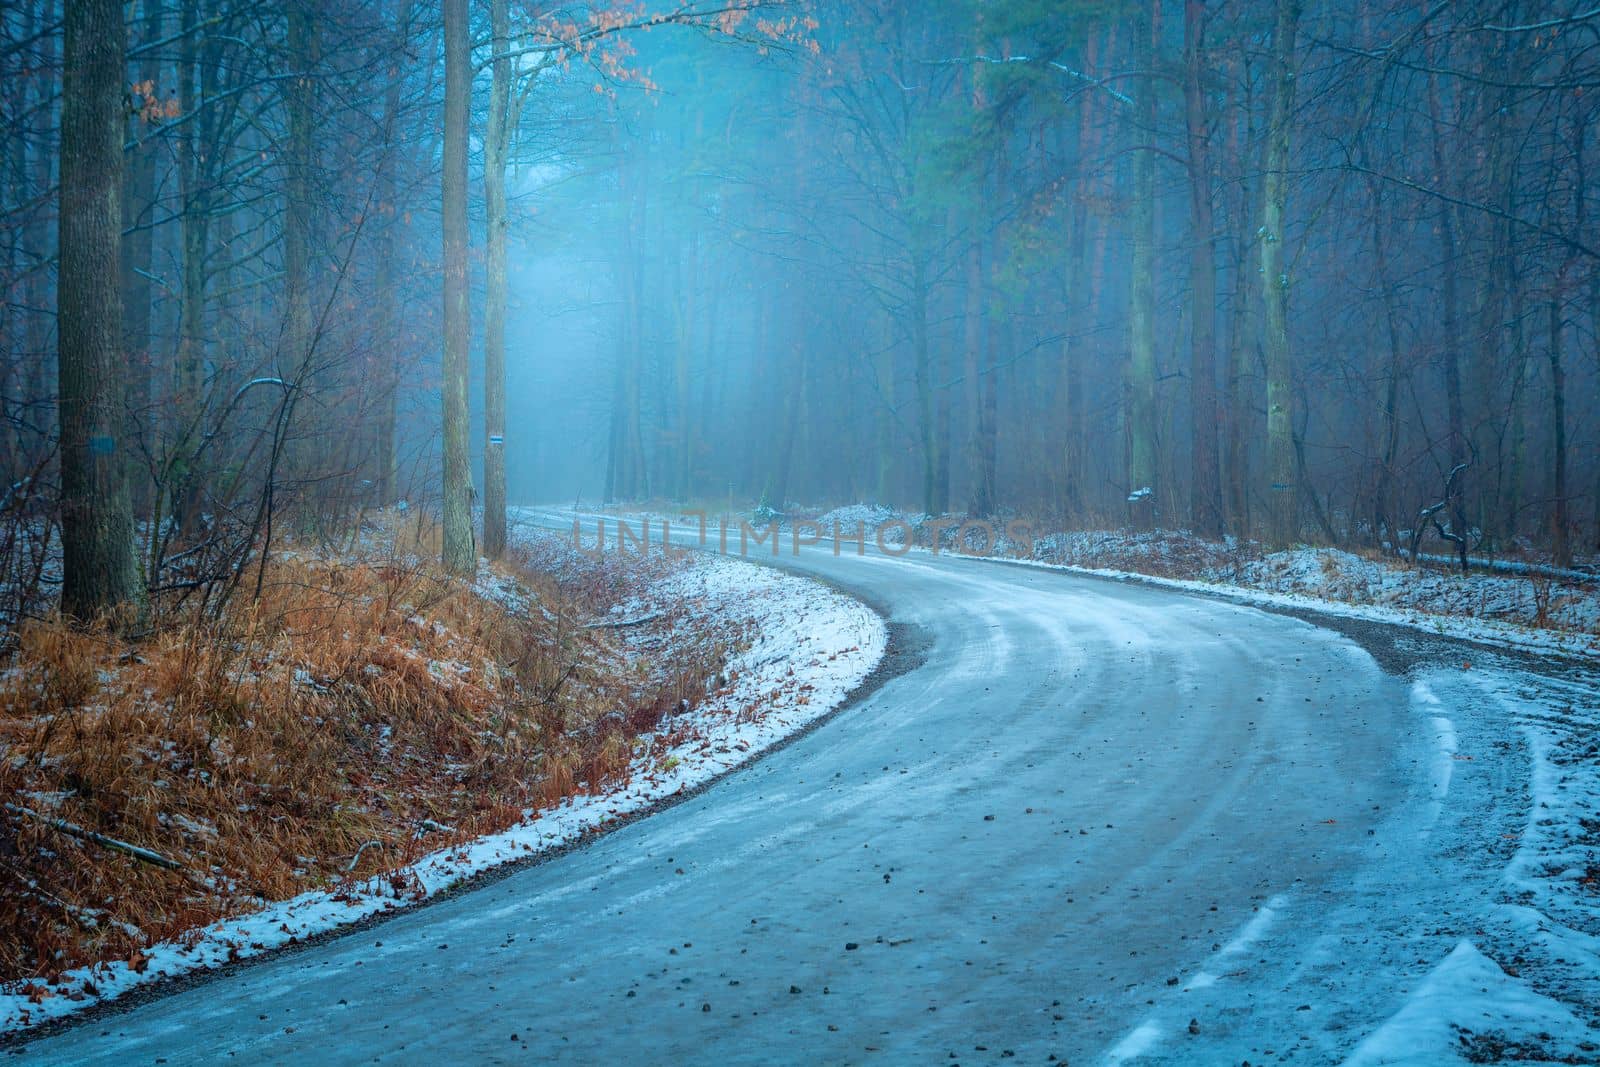 A bend in a foggy winter forest by darekb22